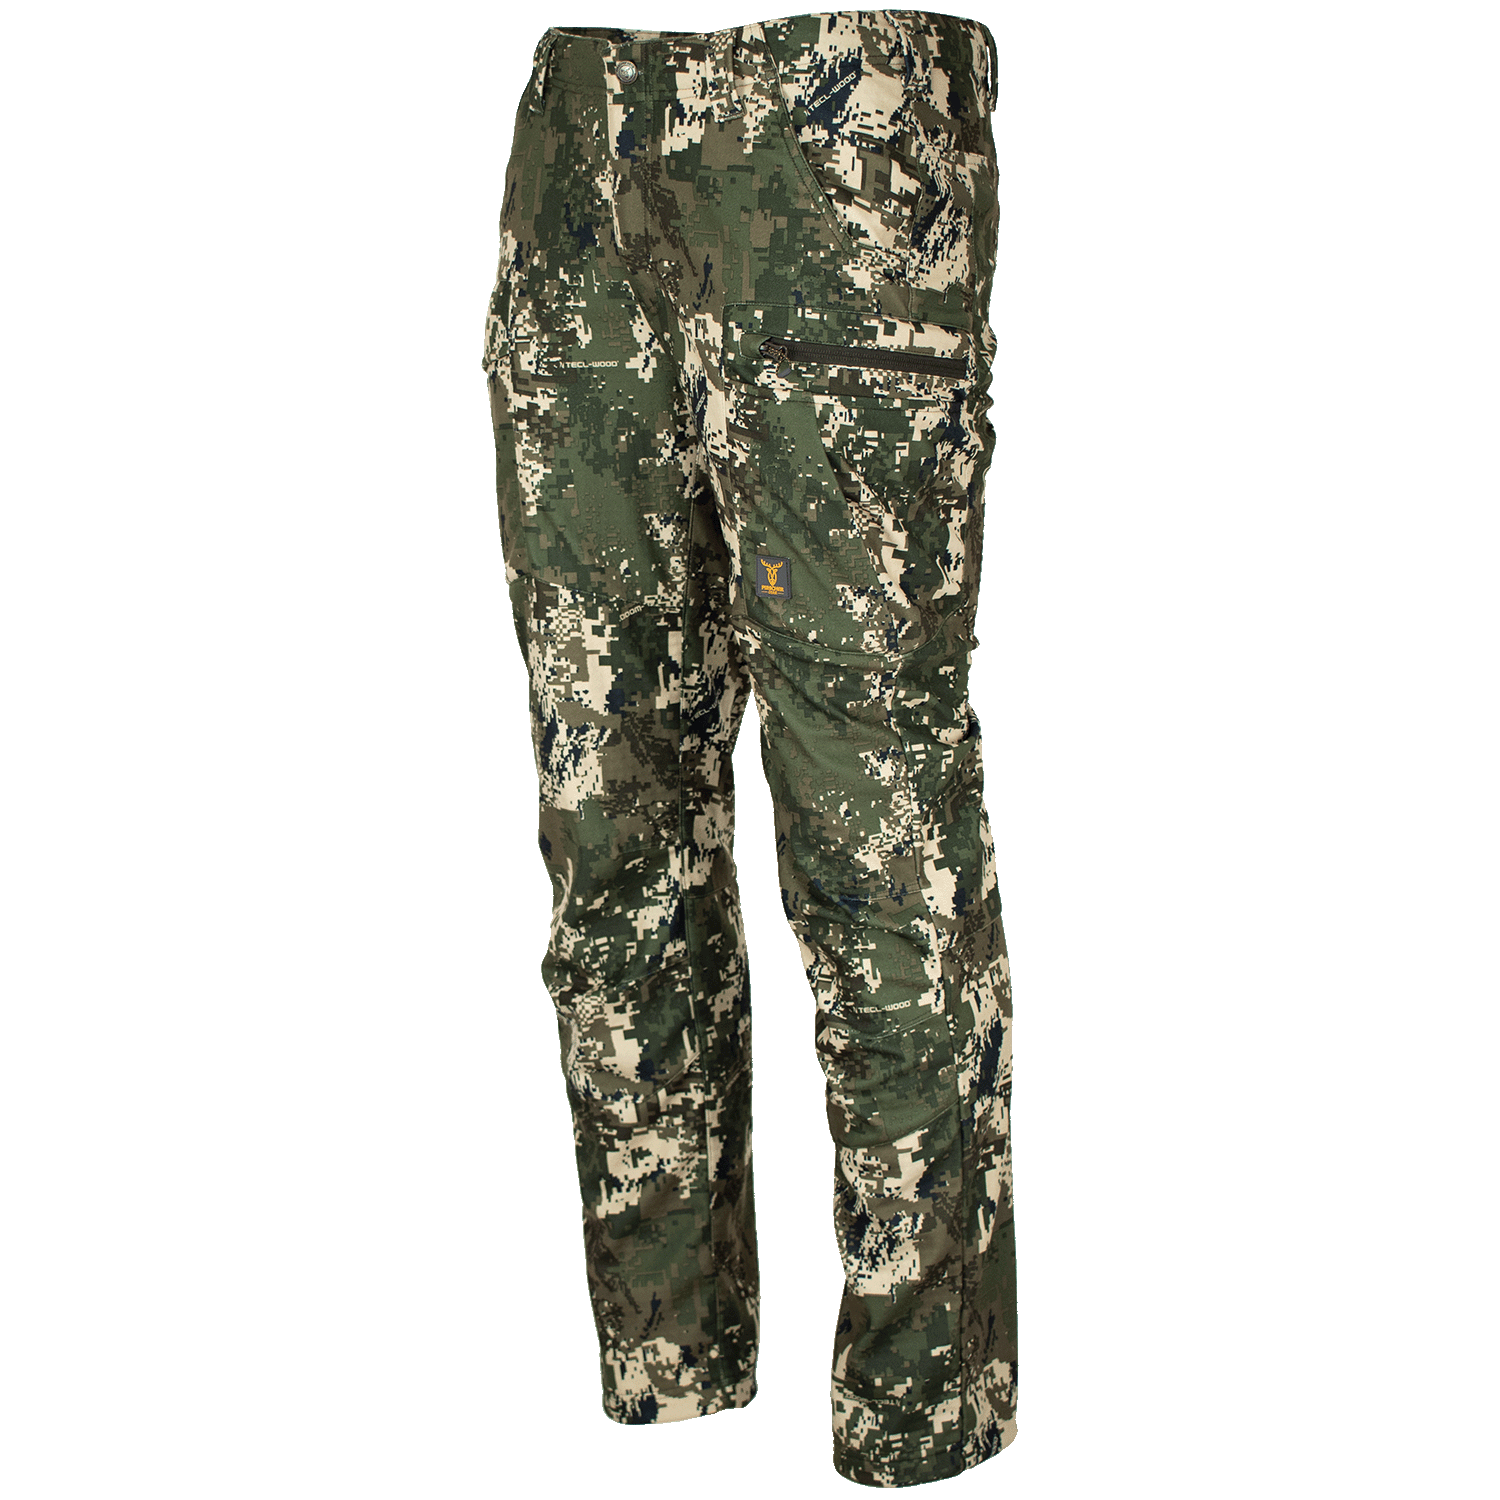  Pirscher Gear Silence Pro broek (Optimax) - Camouflagebroeken